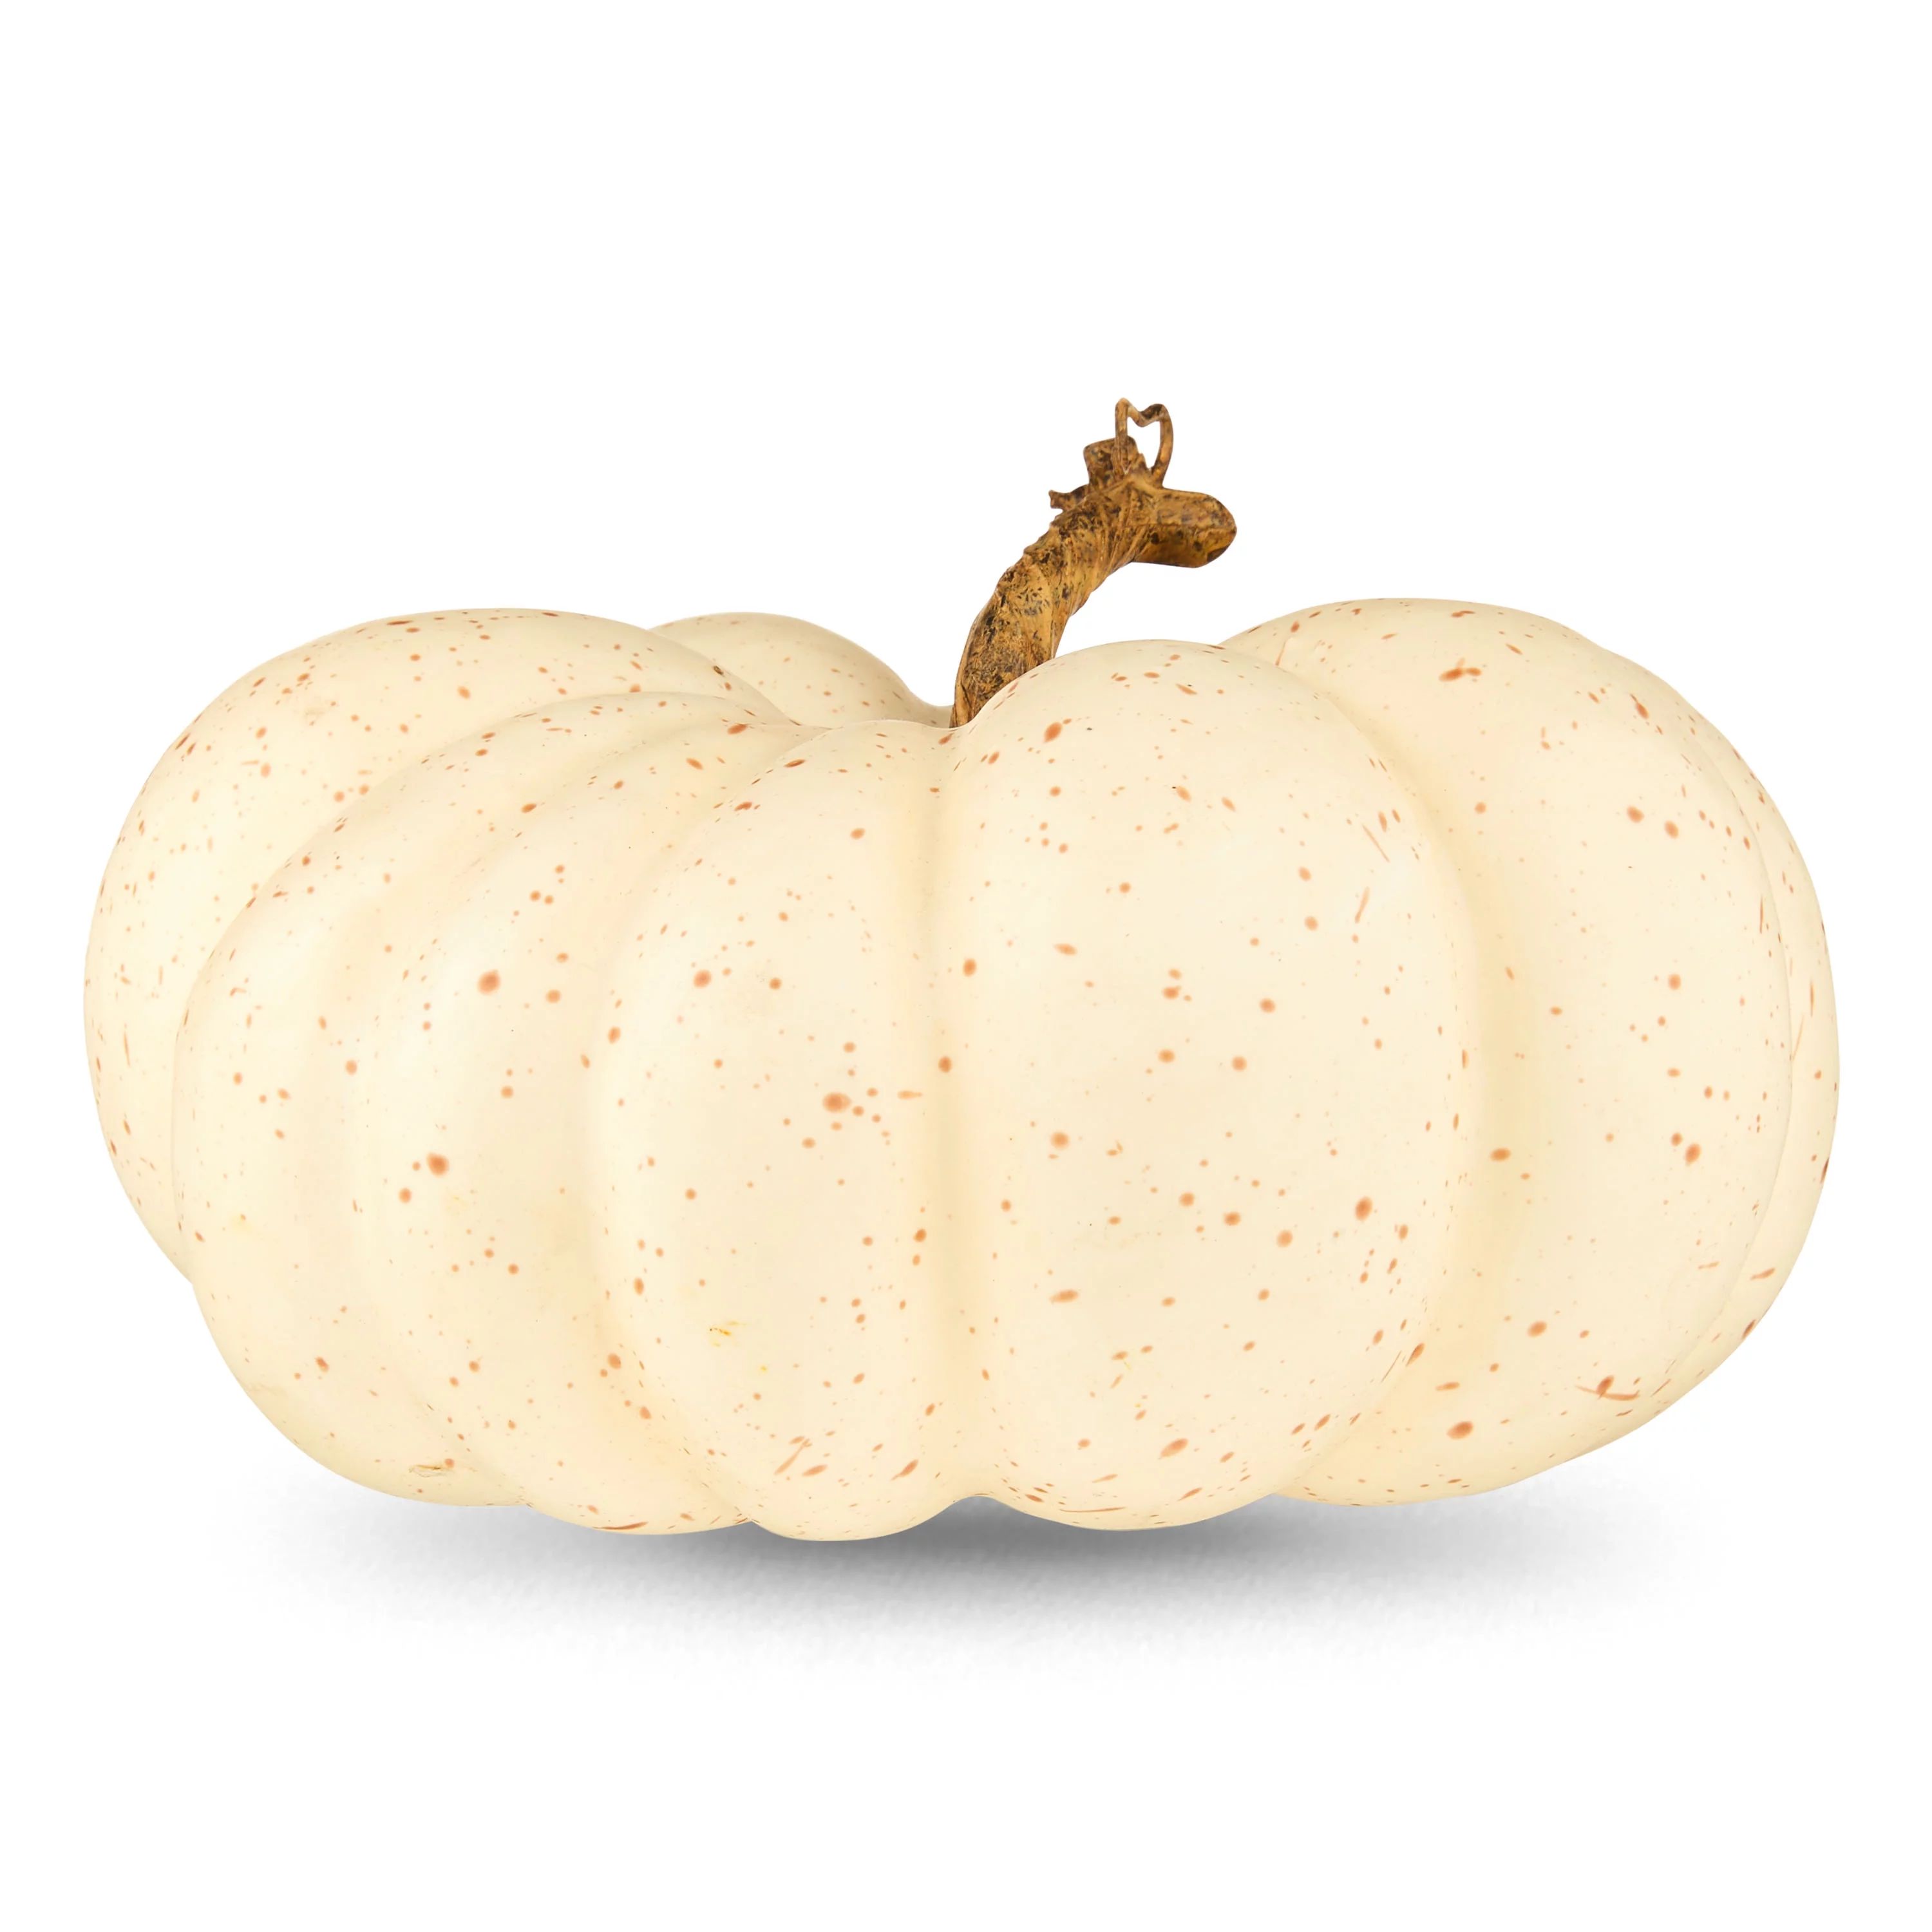 Fall, Harvest Speckled Flat White Foam Pumpkin Decoration, 9 in x 8.5 in x 6 in, Way to Celebrate | Walmart (US)